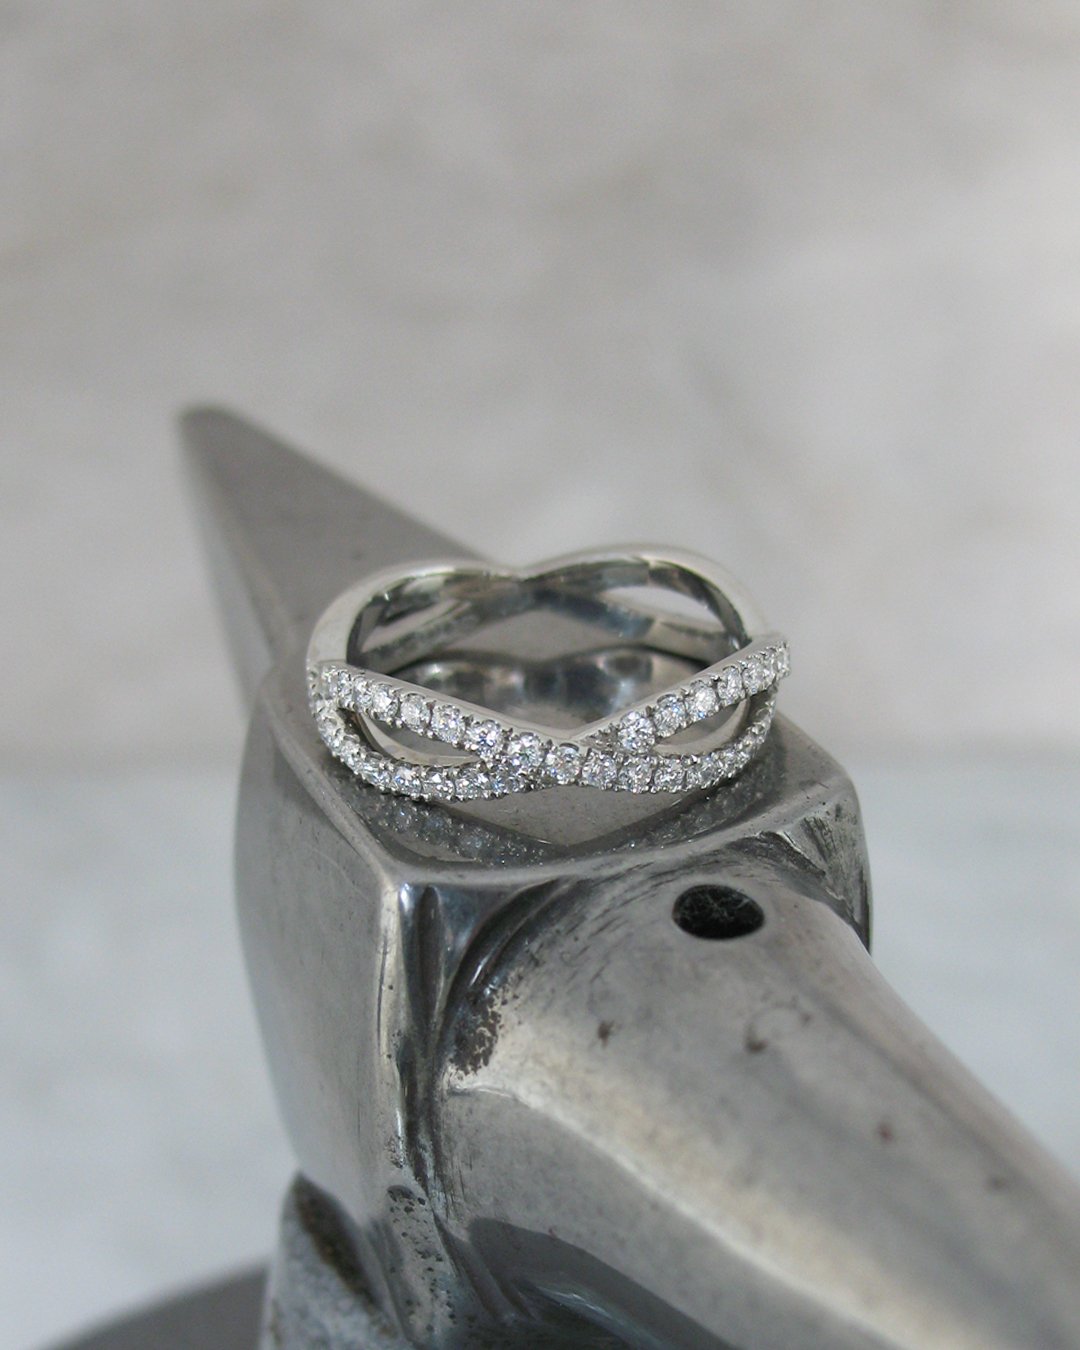 An elegant woven diamond wedding ring